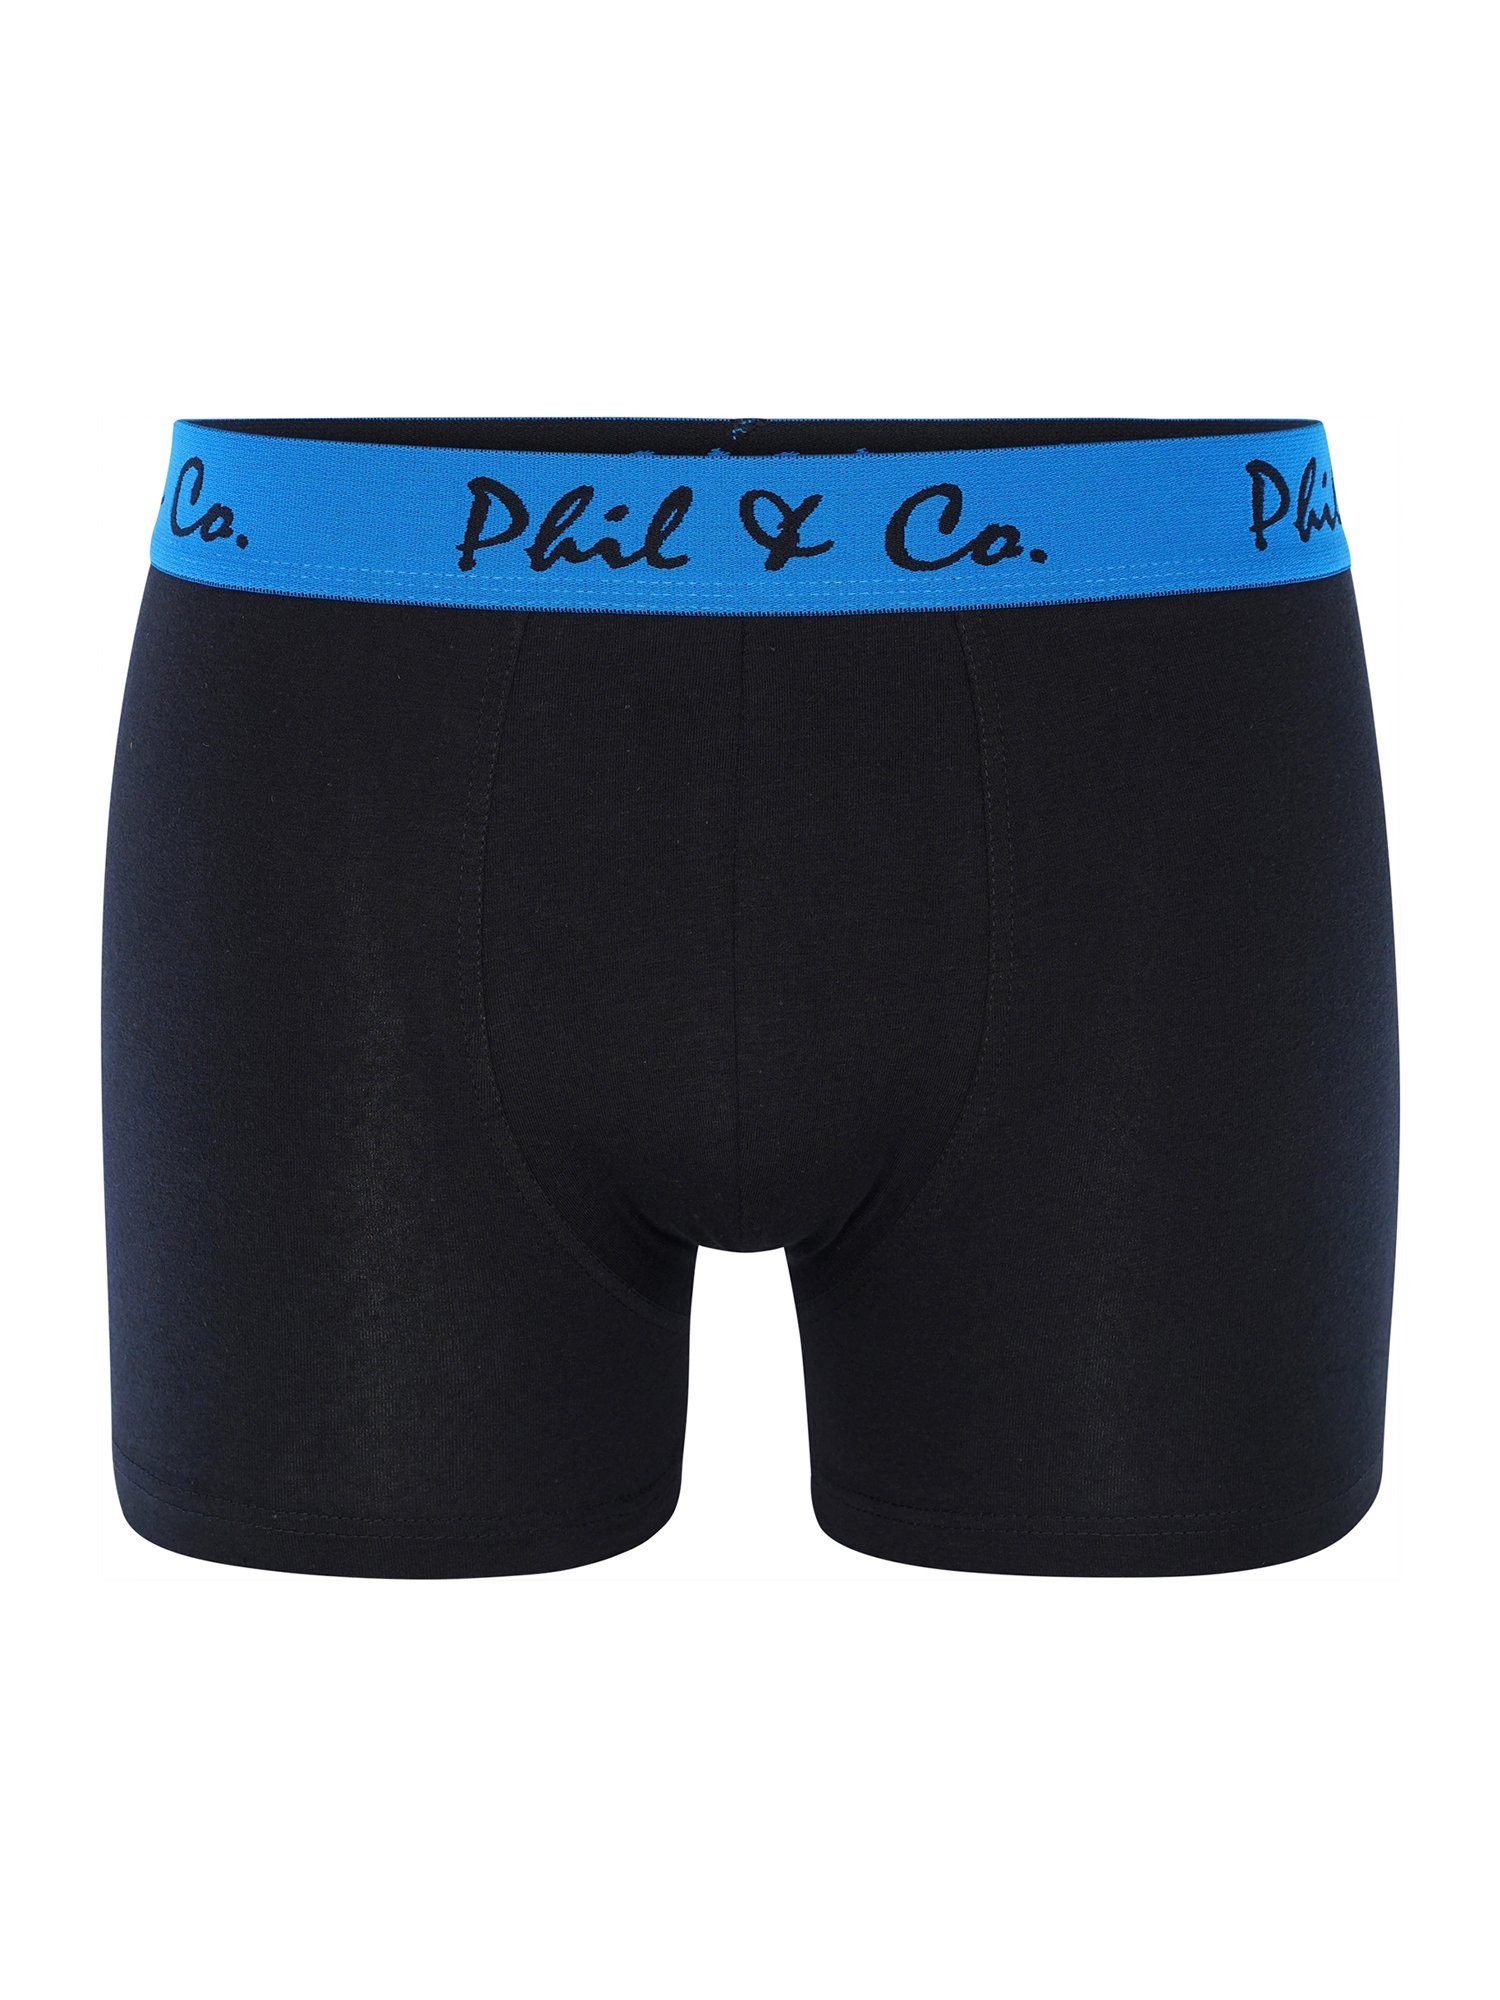 Phil & (6-St) Co. Pants Retro schwarz-blau Jersey